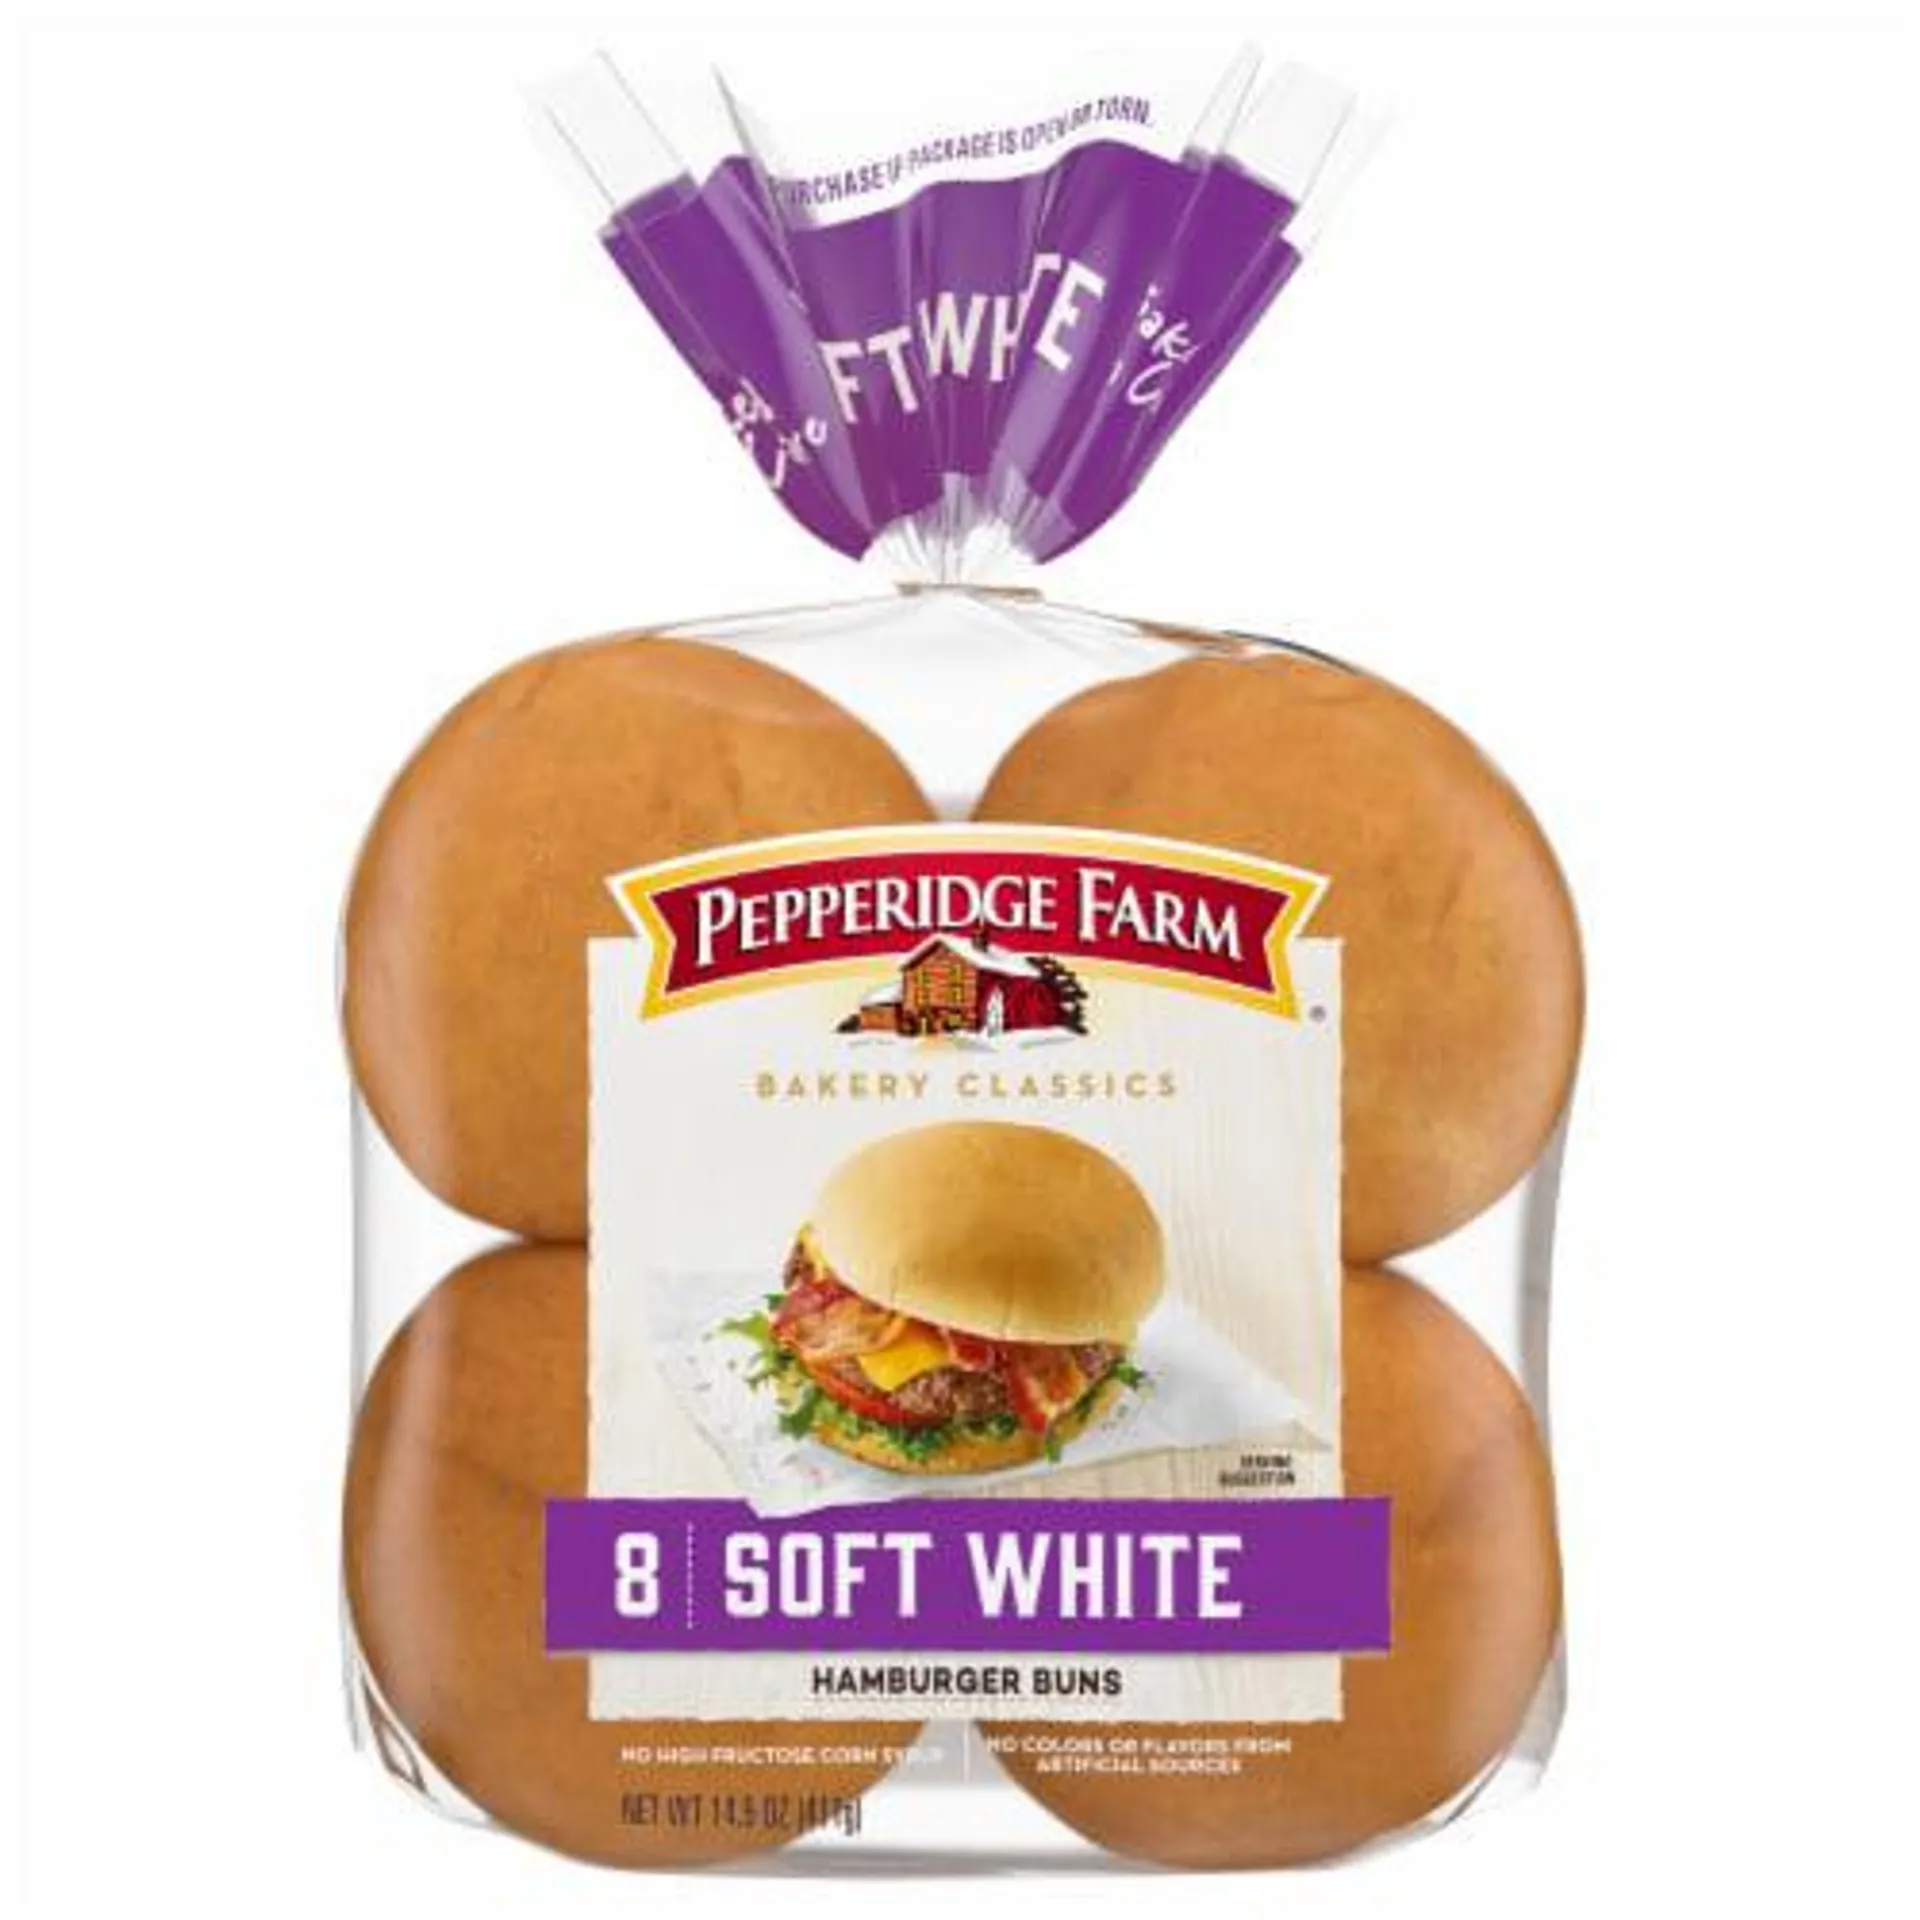 Pepperidge Farm® Bakery Classics Soft White Hamburger Buns